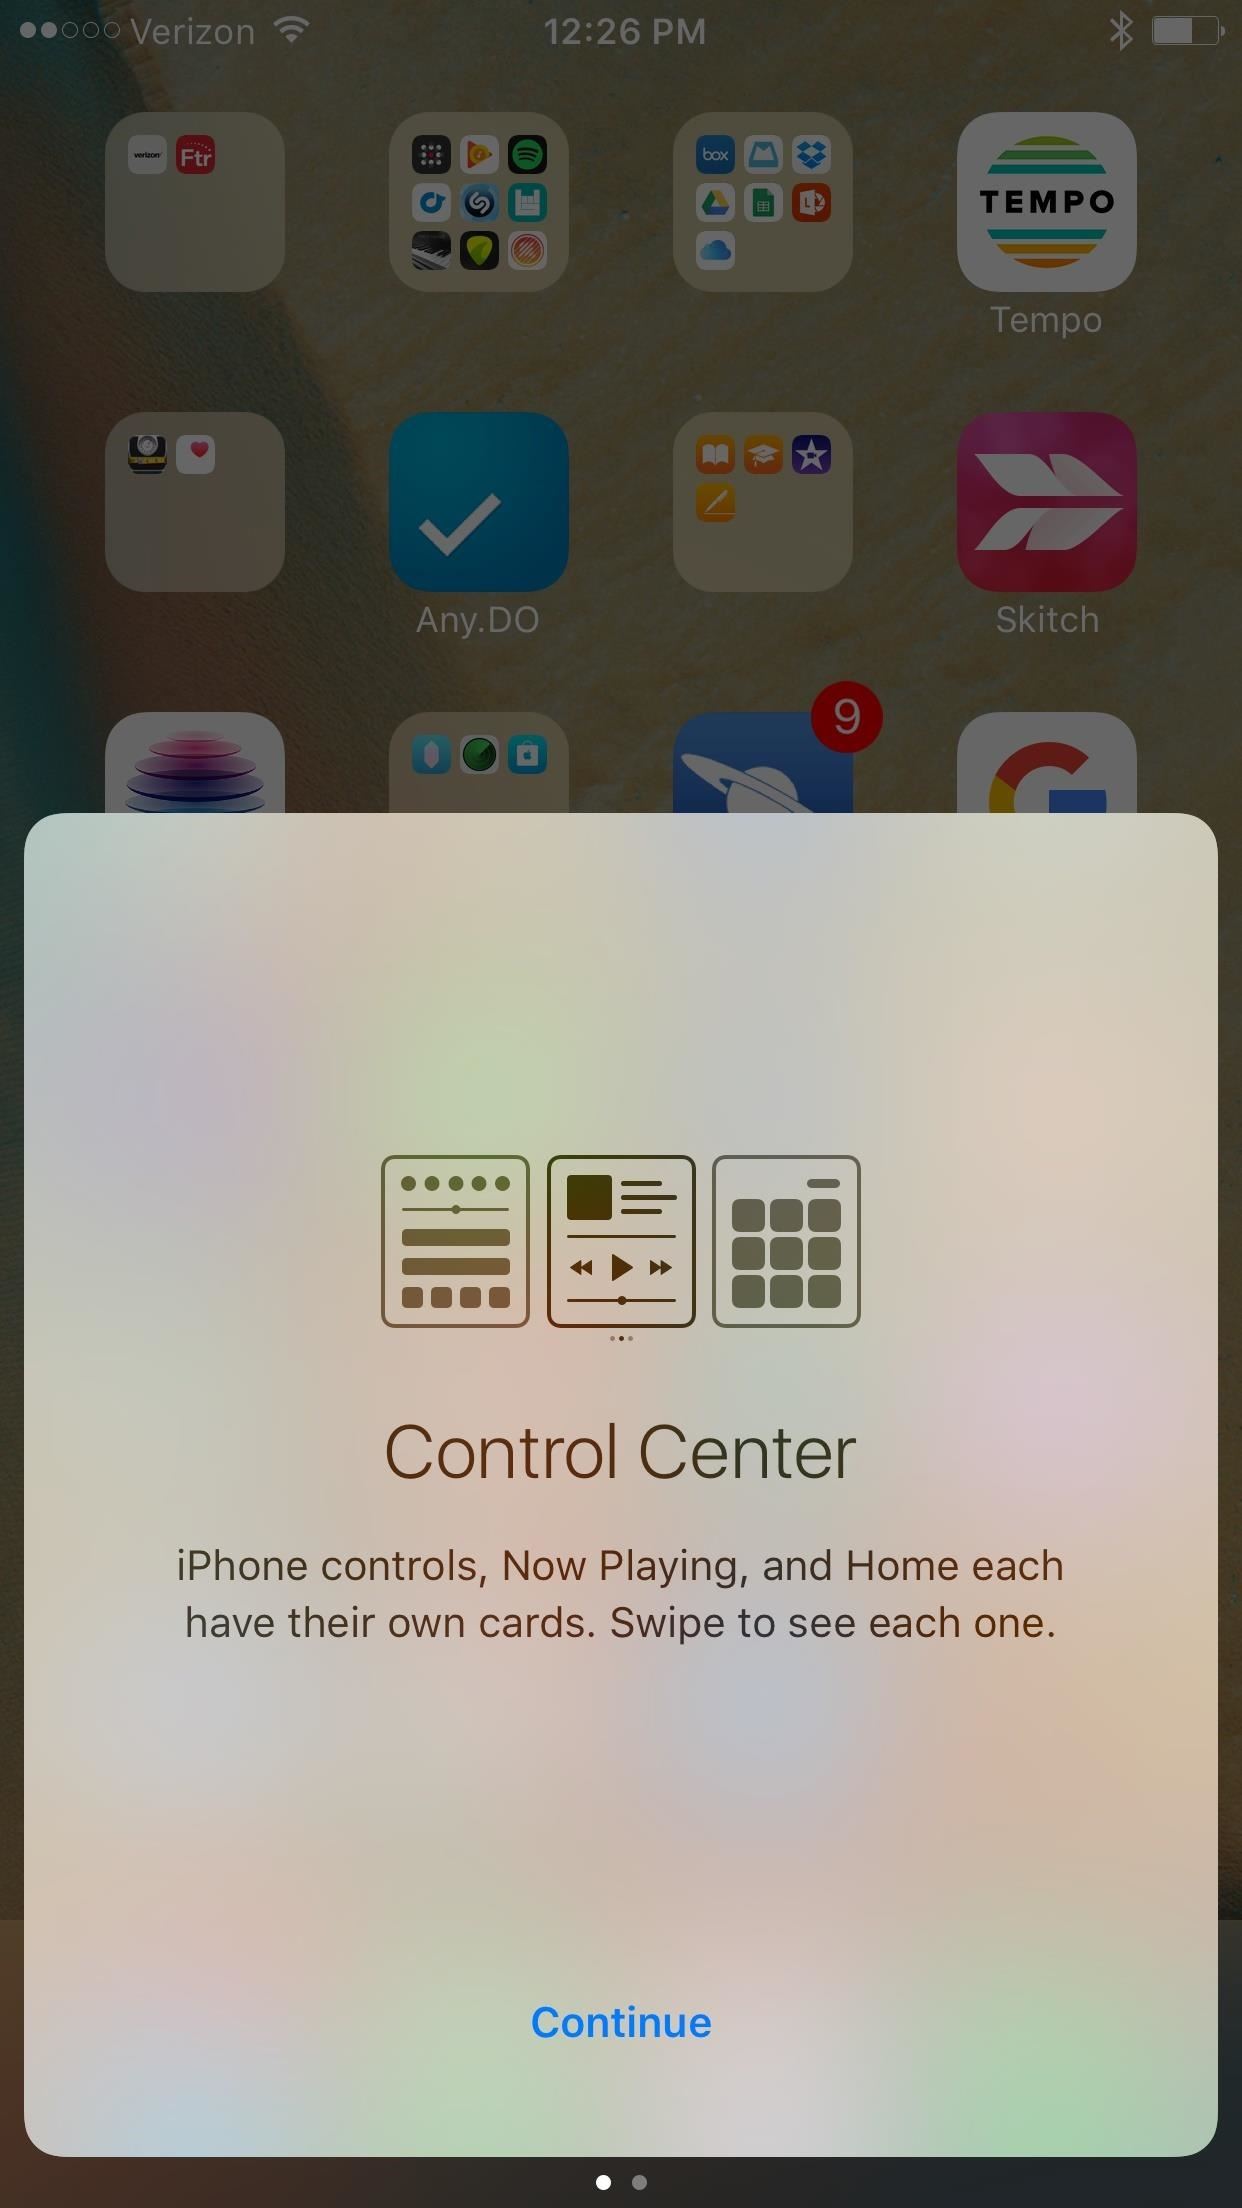 Apple's Latest iOS 10 Beta 4 Adds Emojis & More